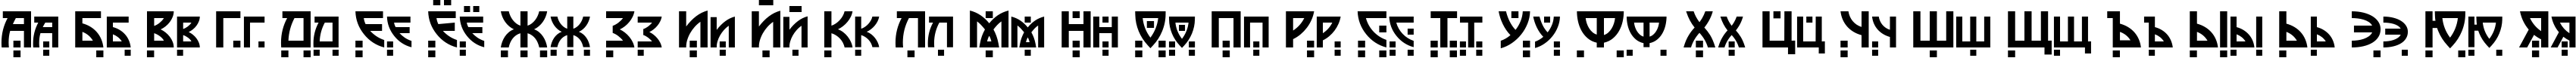 Пример написания русского алфавита шрифтом Postmodern Two